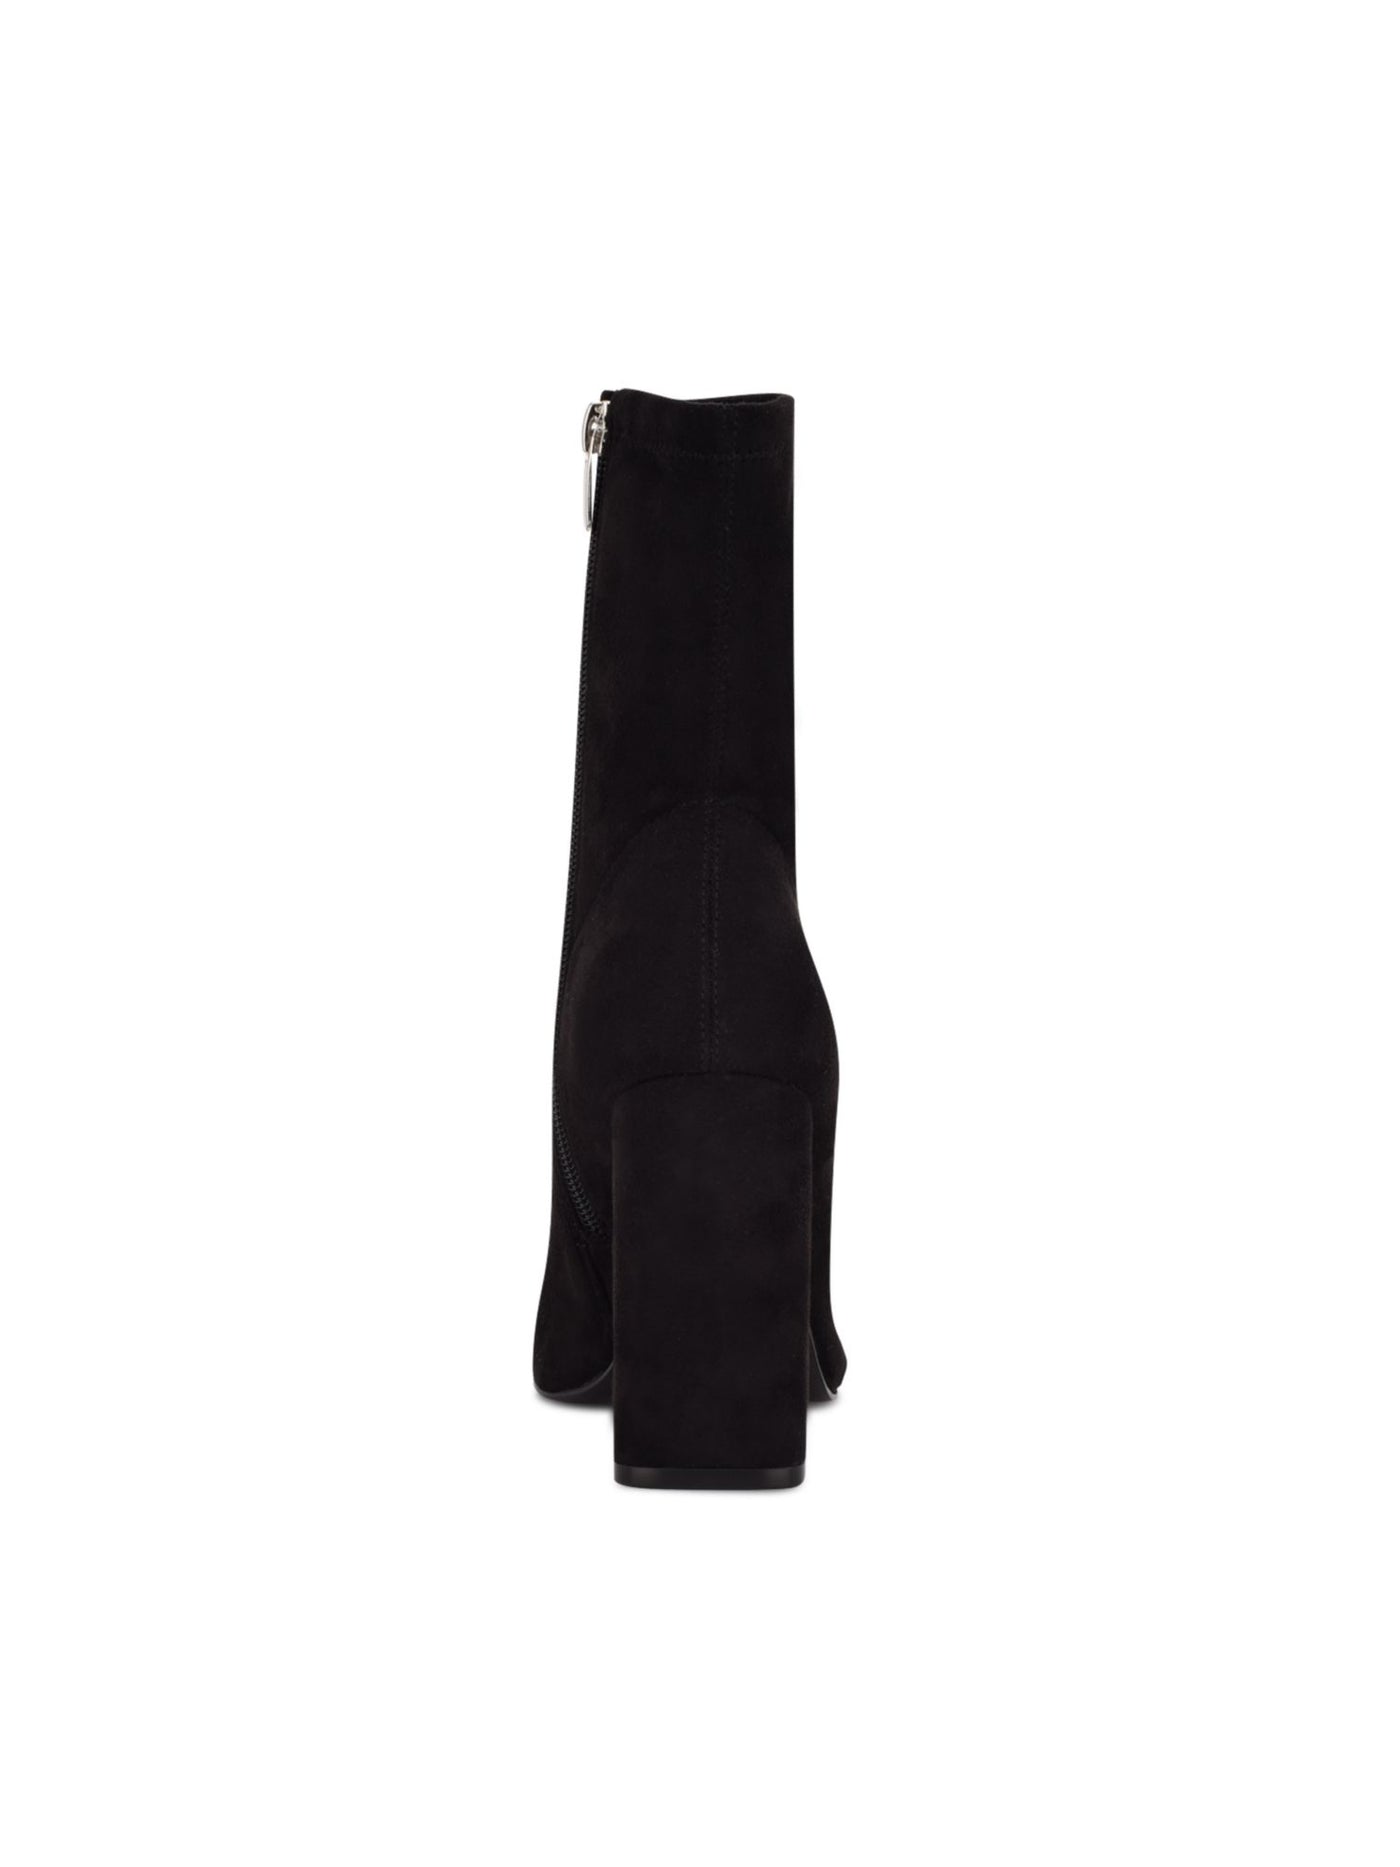 NINE WEST Womens Black Cushioned Xrey Pointed Toe Block Heel Zip-Up Heeled Boots 6.5 M